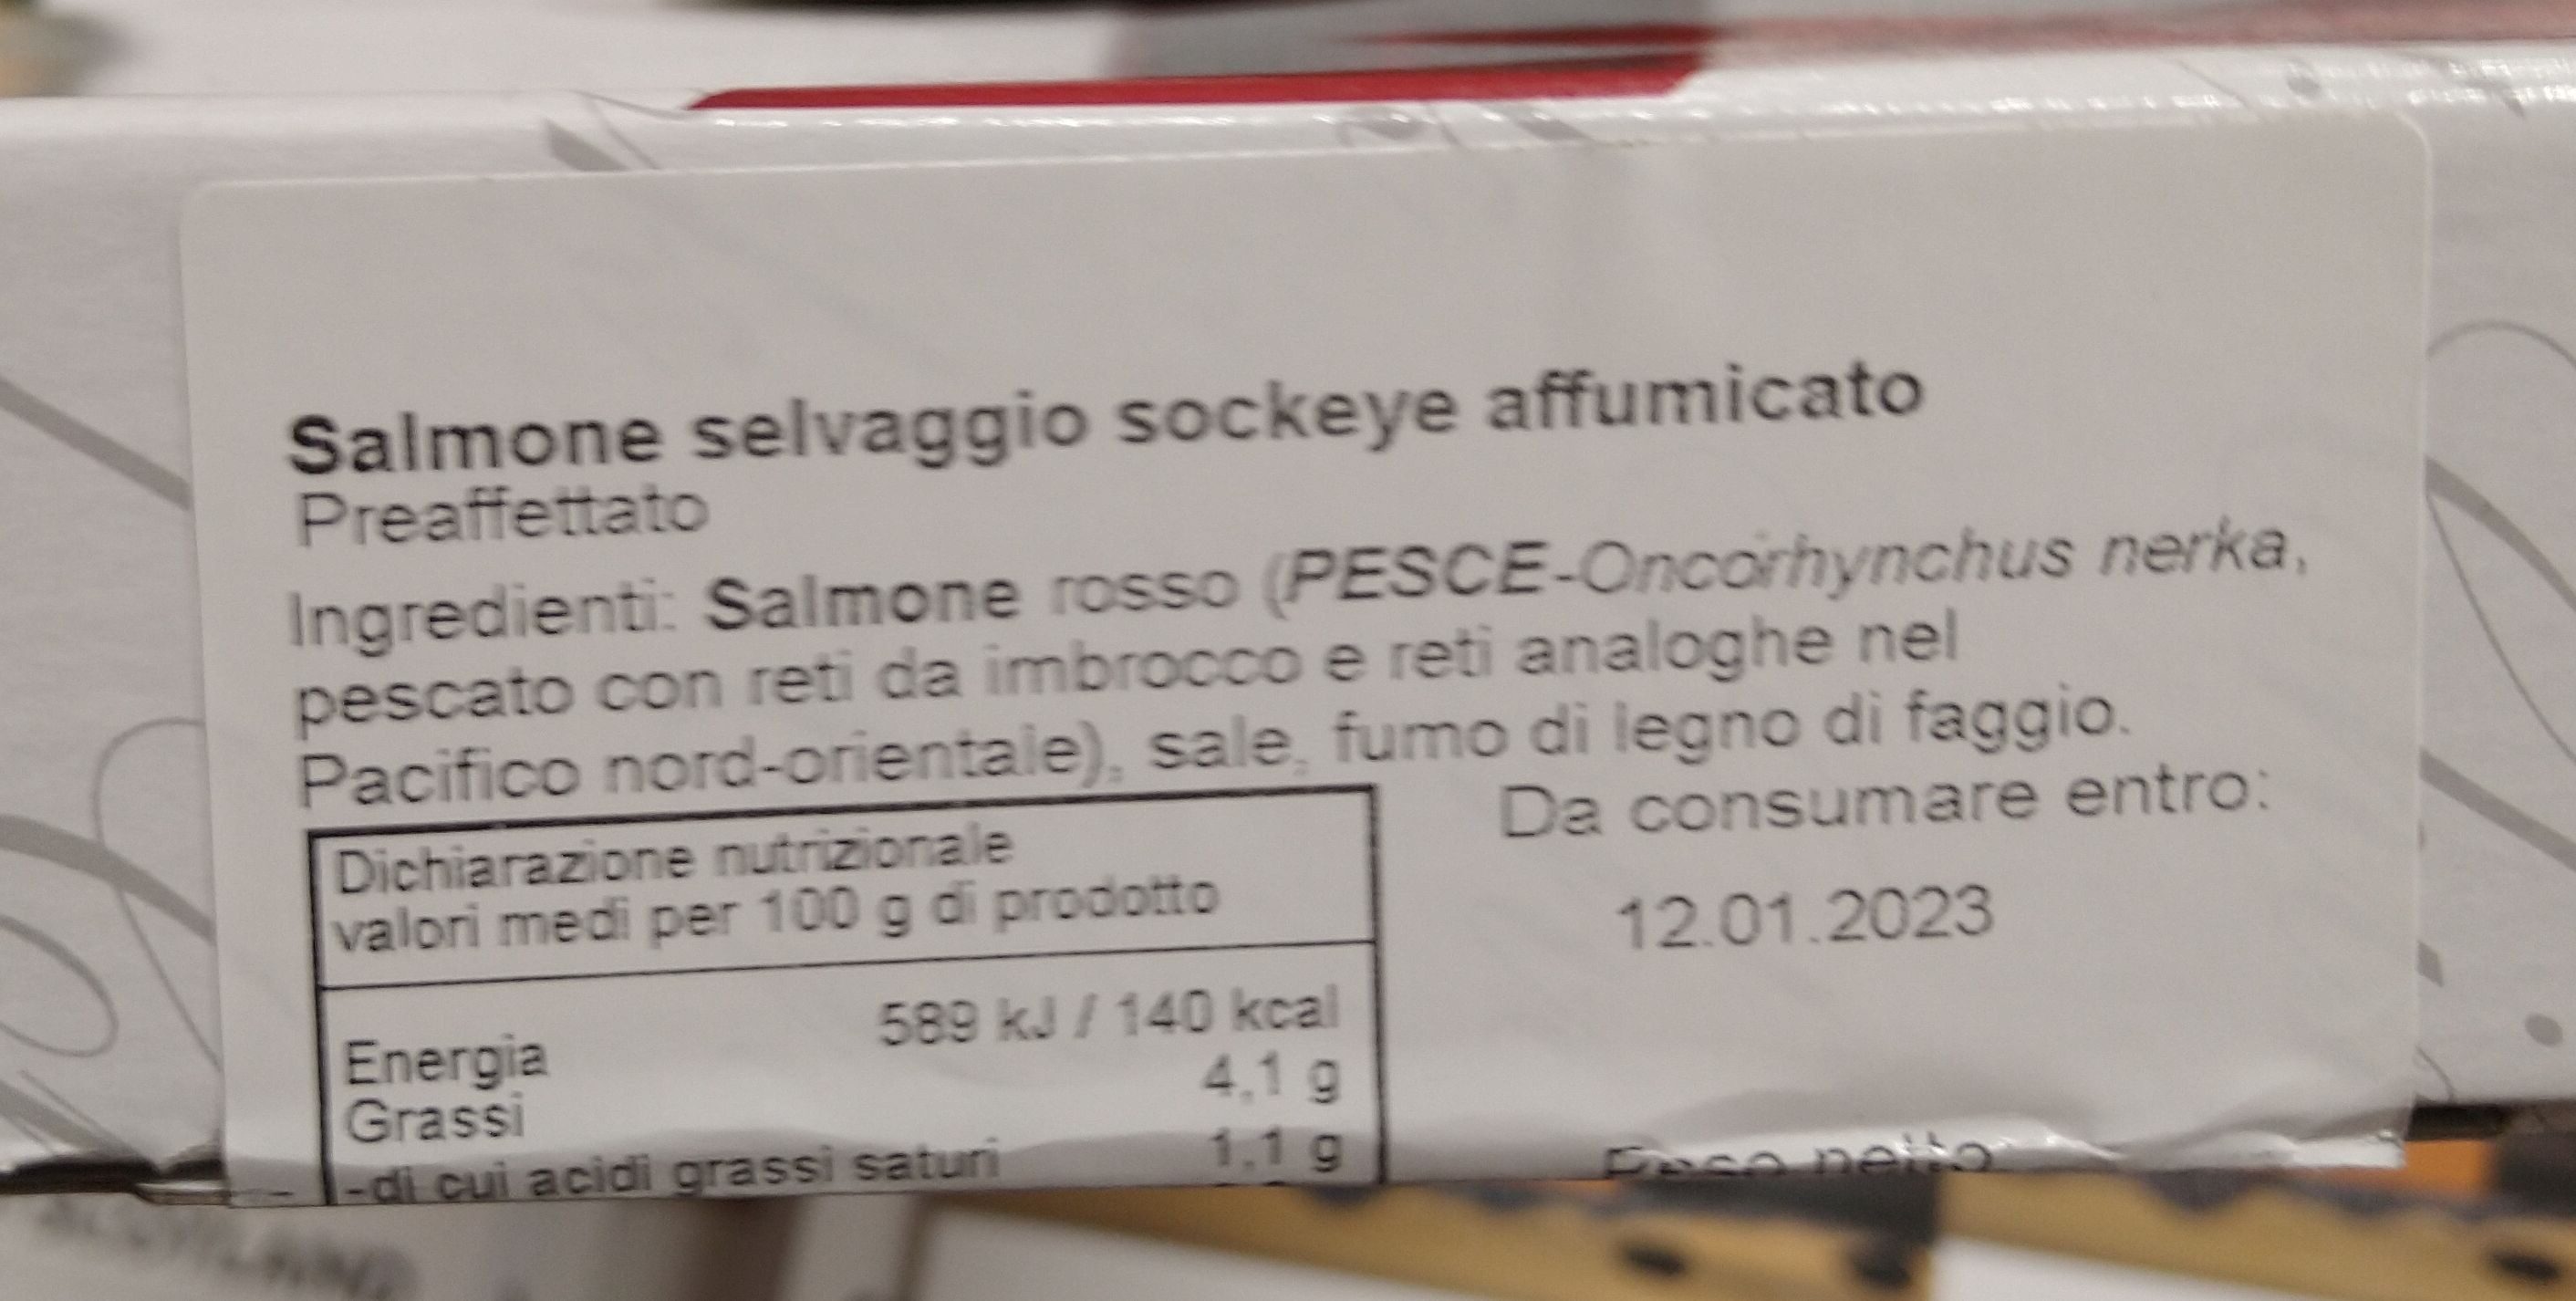 Salmone selvaggio affumicato - Ingredients - it